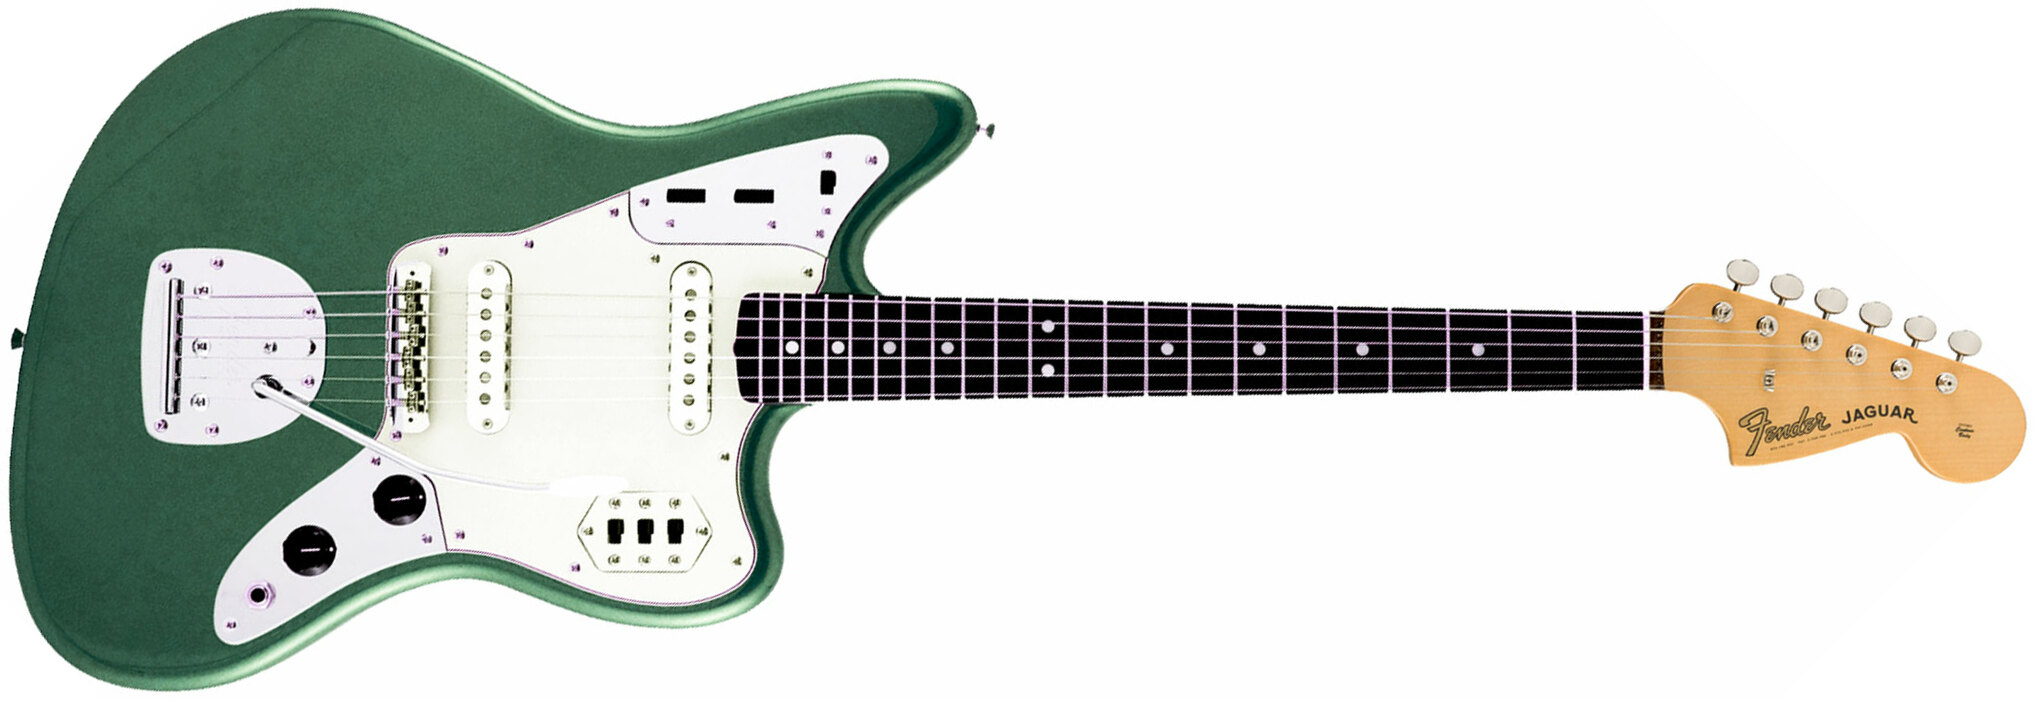 Fender Jaguar Traditional Ii 60s Jap 2s Trem Rw - Sherwood Green Metallic - Guitarra electrica retro rock - Main picture